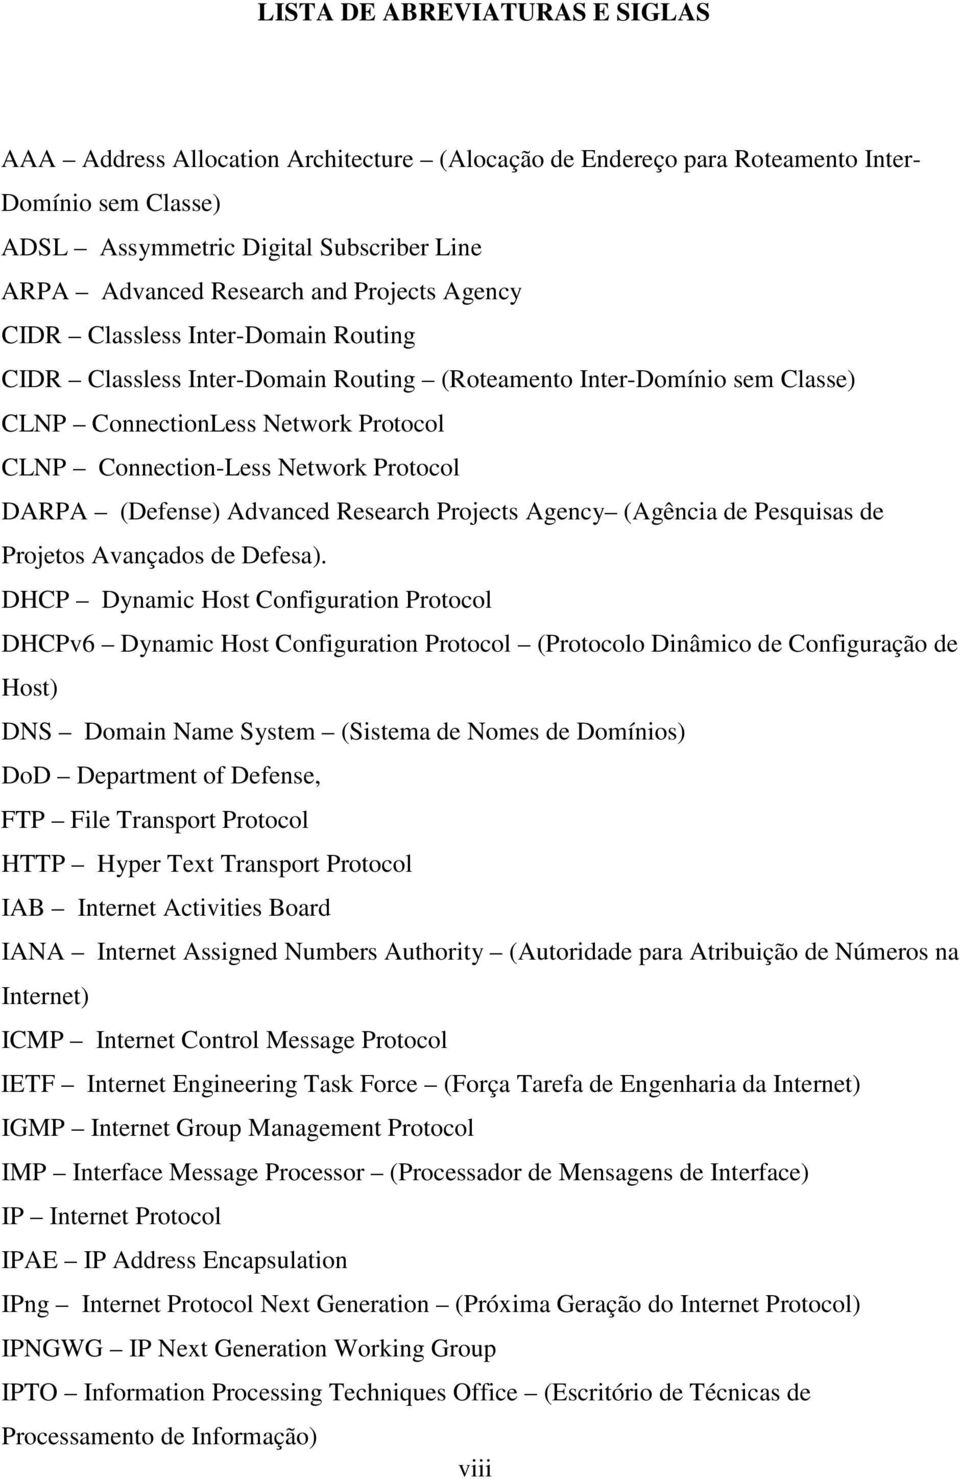 Protocol DARPA (Defense) Advanced Research Projects Agency (Agência de Pesquisas de Projetos Avançados de Defesa).